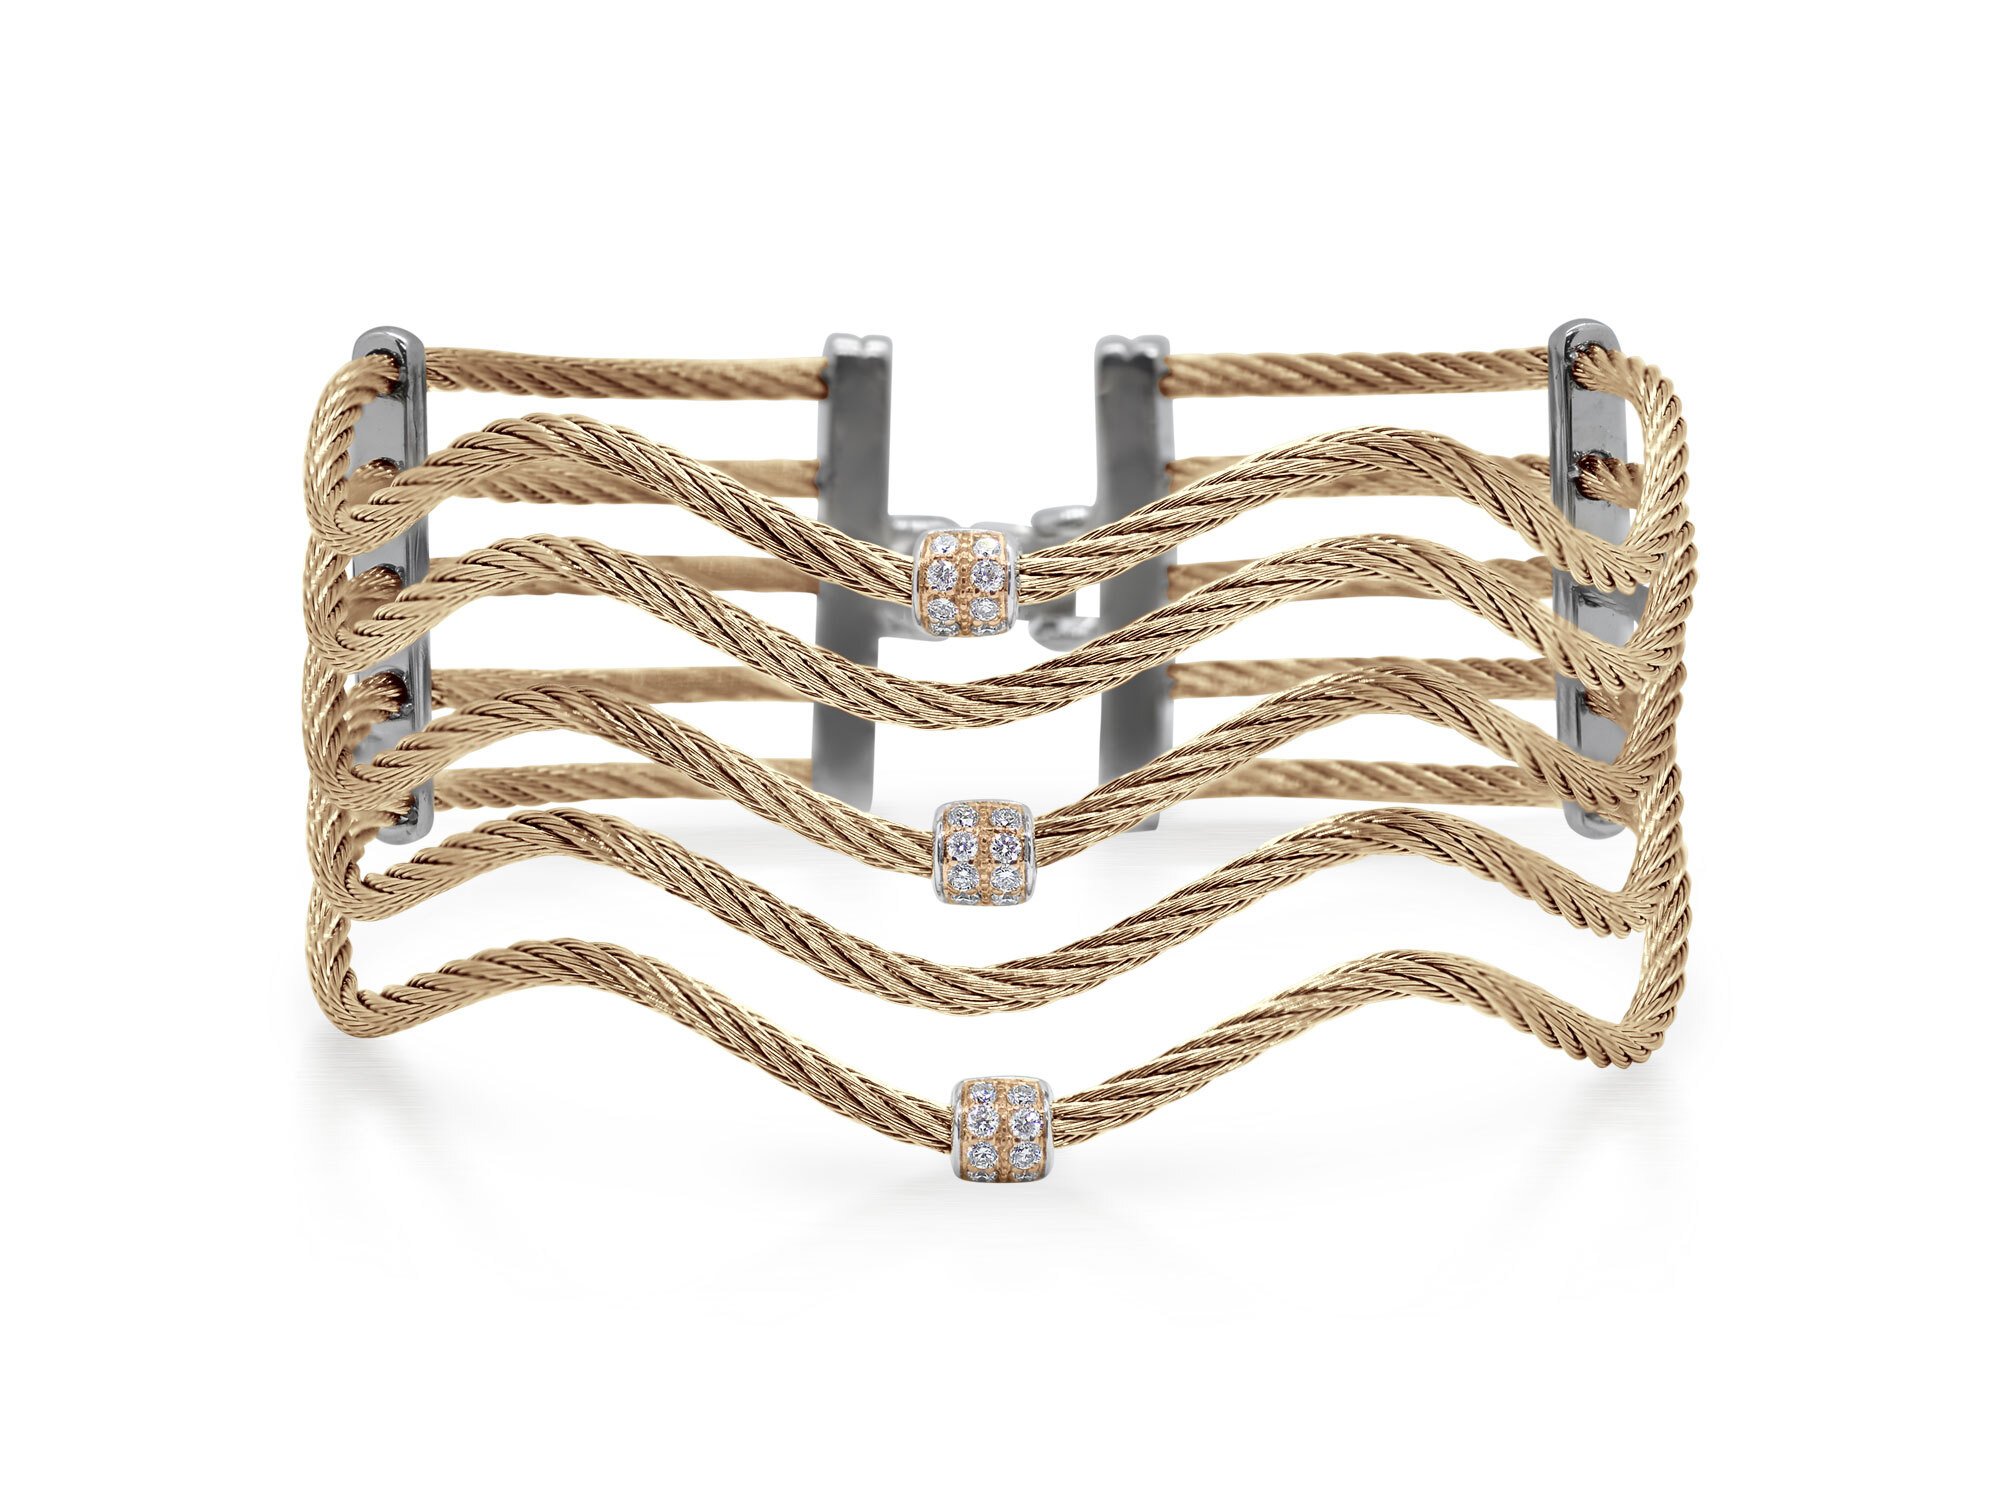 Cable Wave Bracelet with 18kt Rose Gold & Diamonds